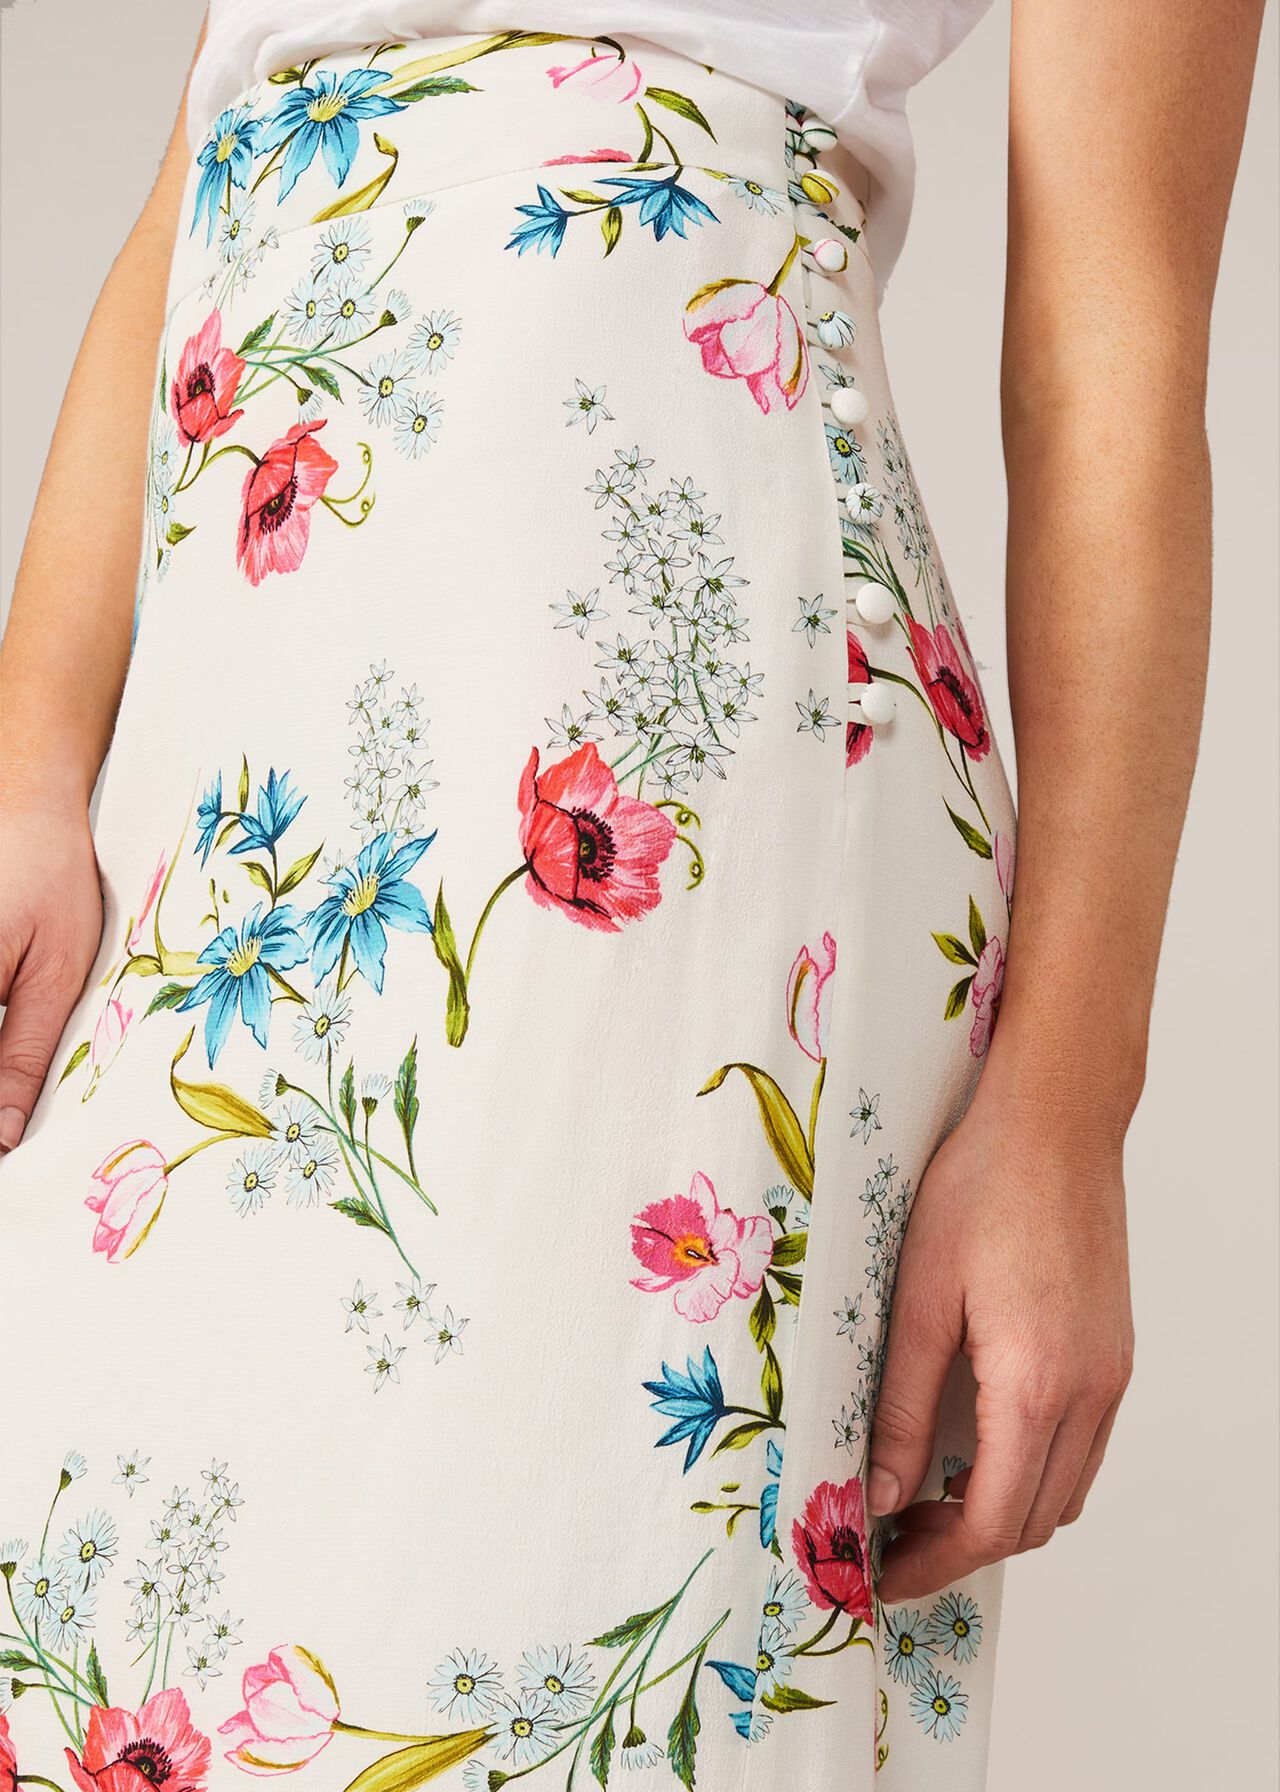 Natyla Floral Midi Skirt